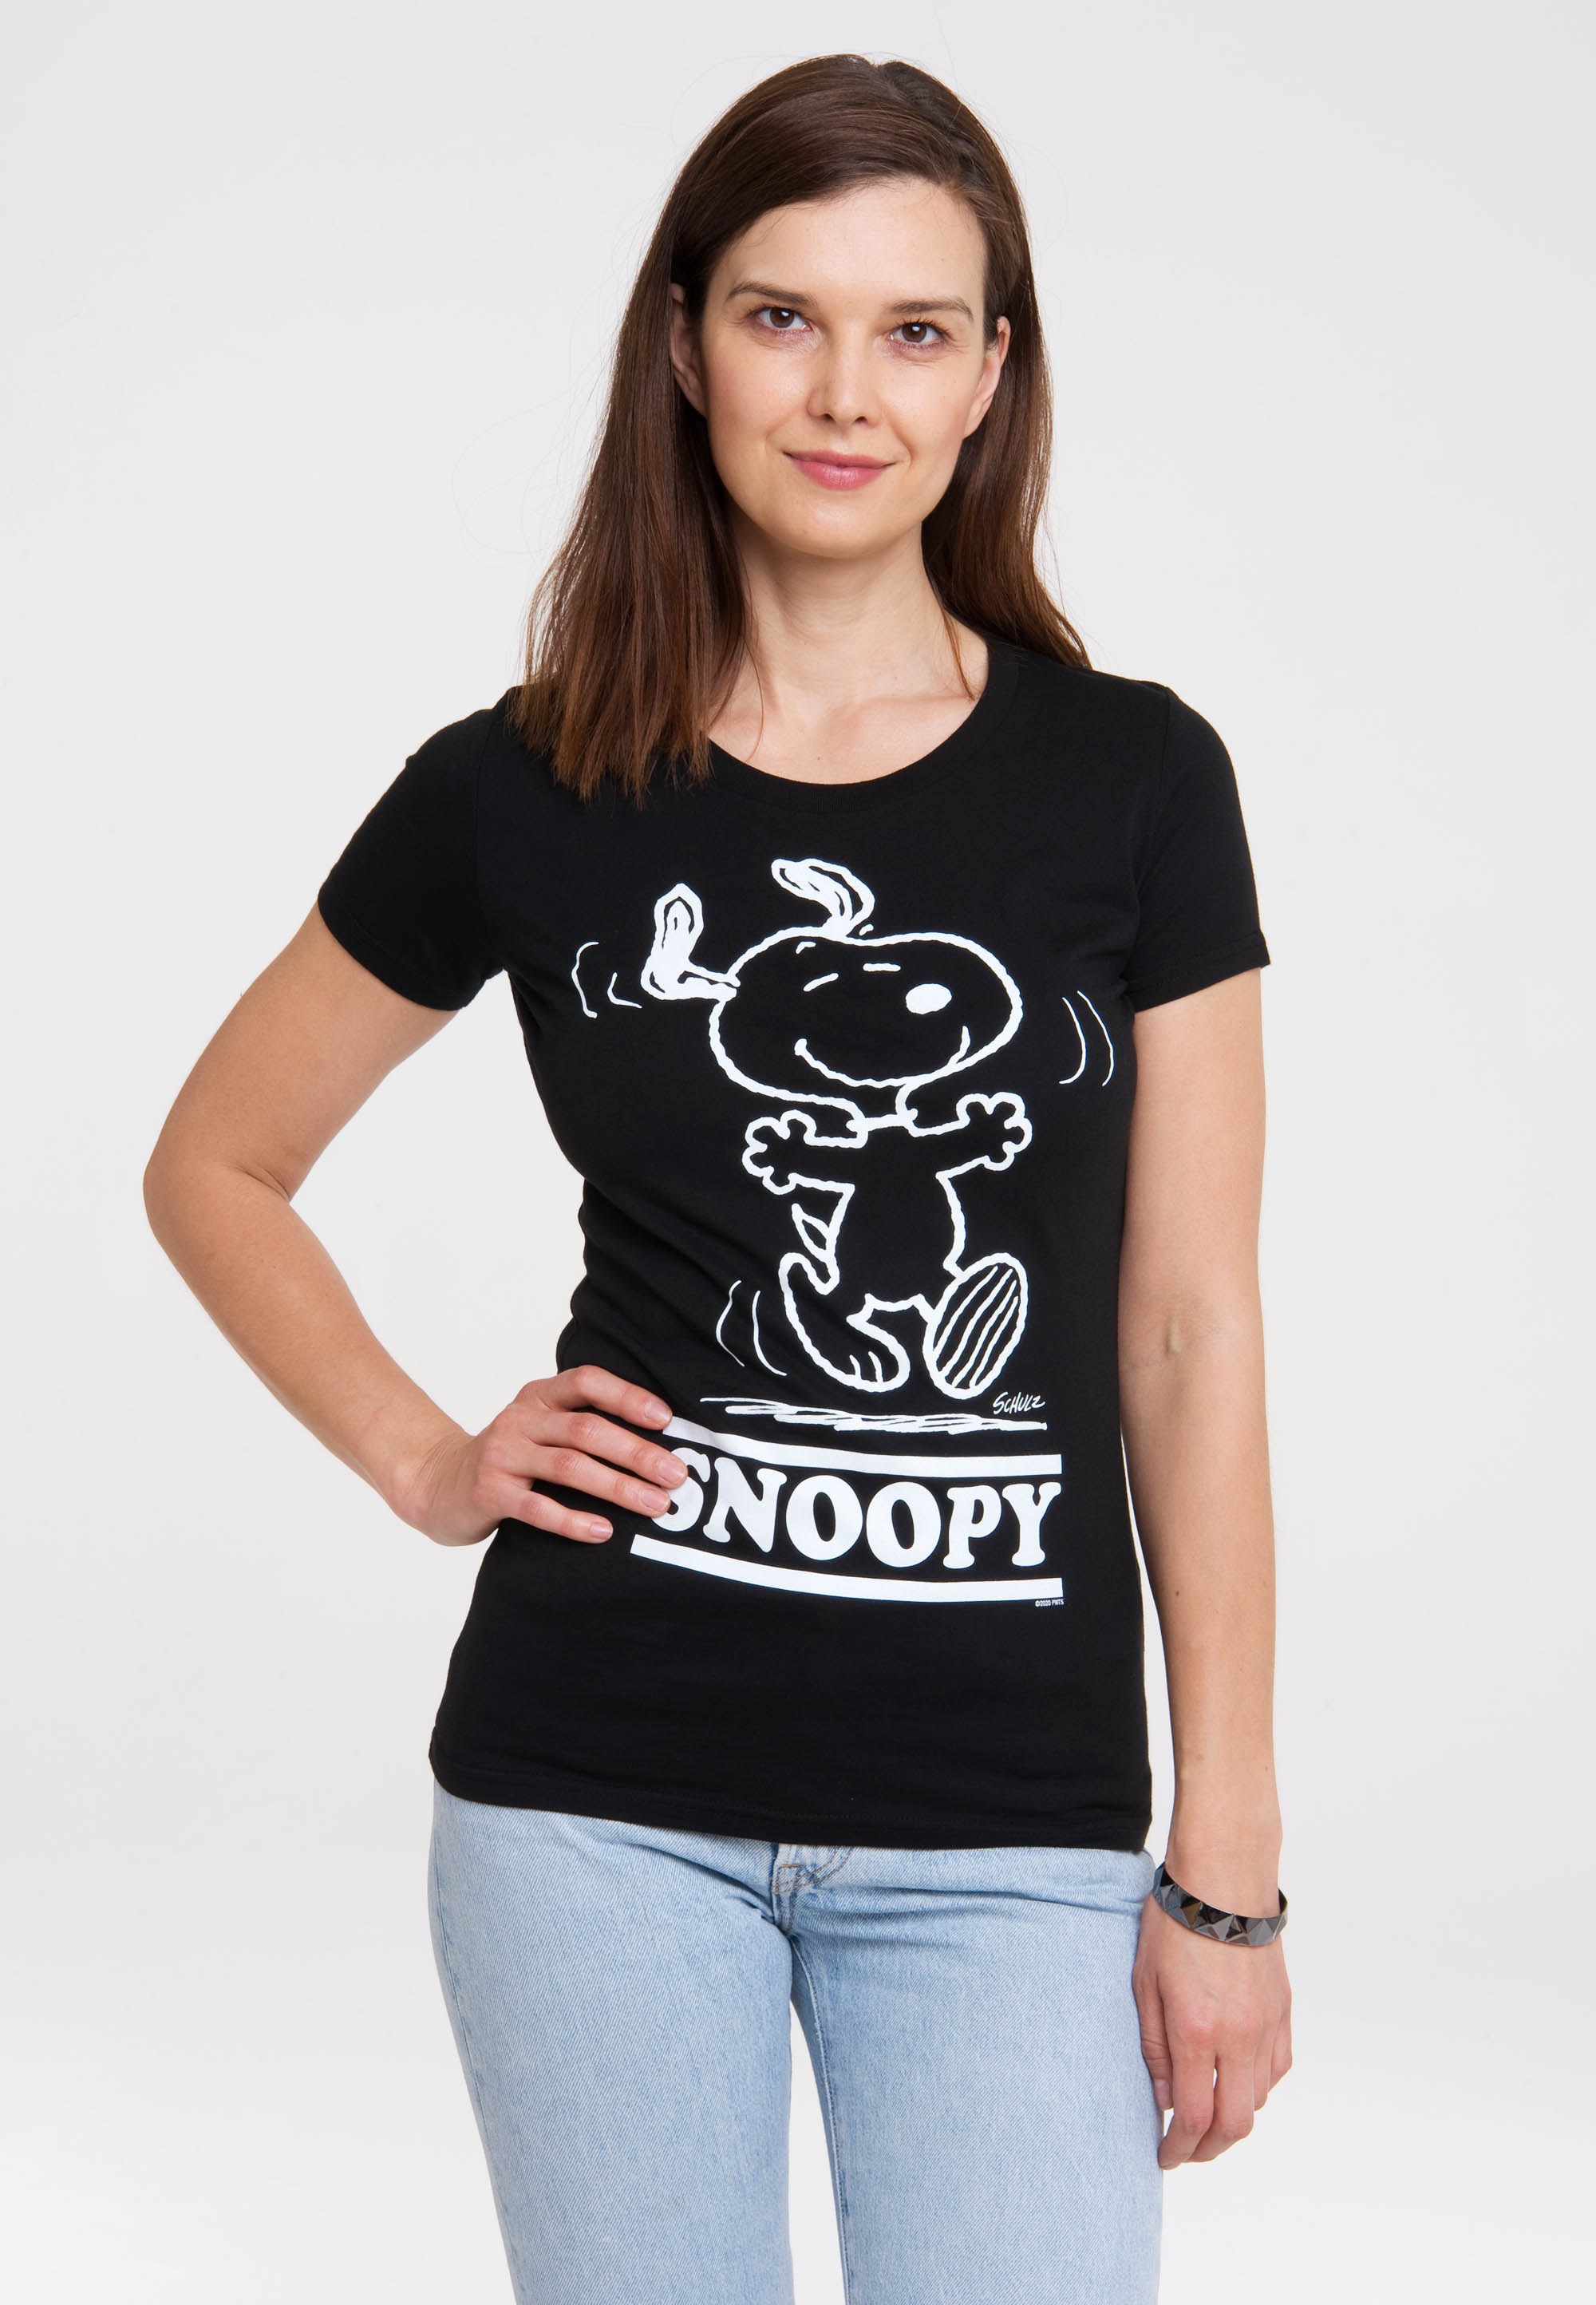 »Snoopy mit T-Shirt LOGOSHIRT shoppen - lizenziertem Happy«, Original-Print